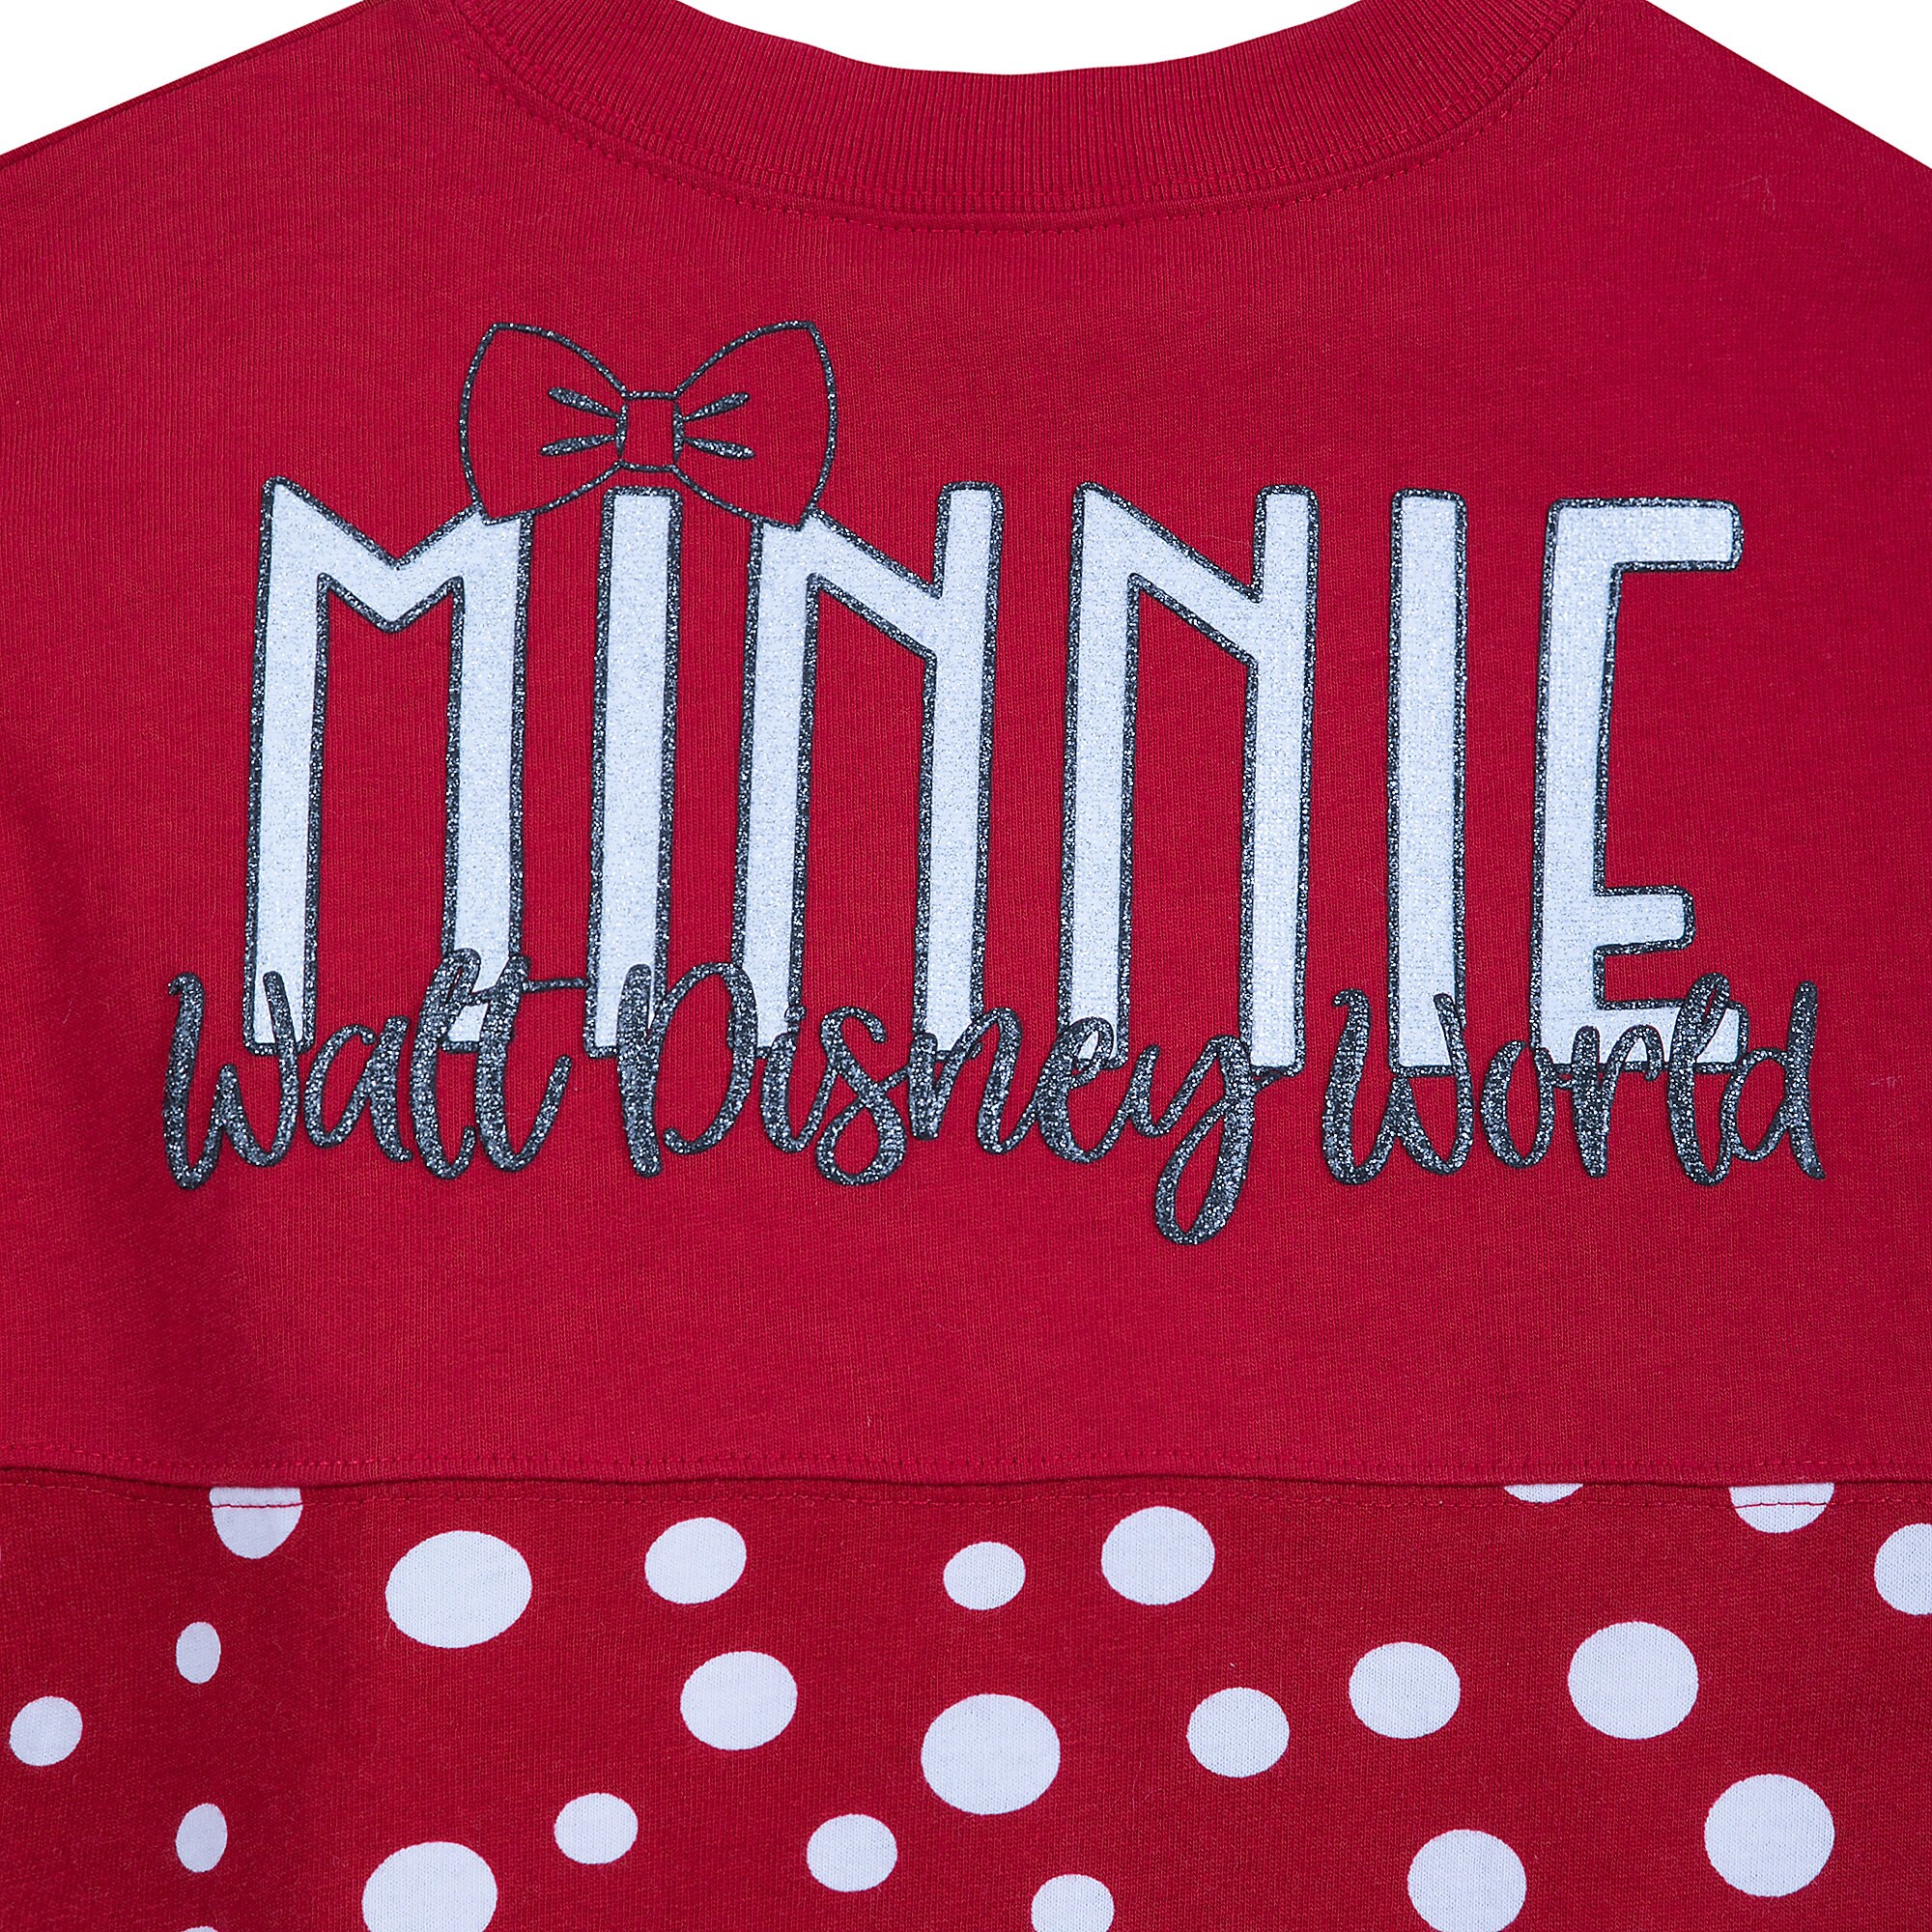 Minnie Mouse Polka Dot Spirit Jersey for Kids - Walt Disney World